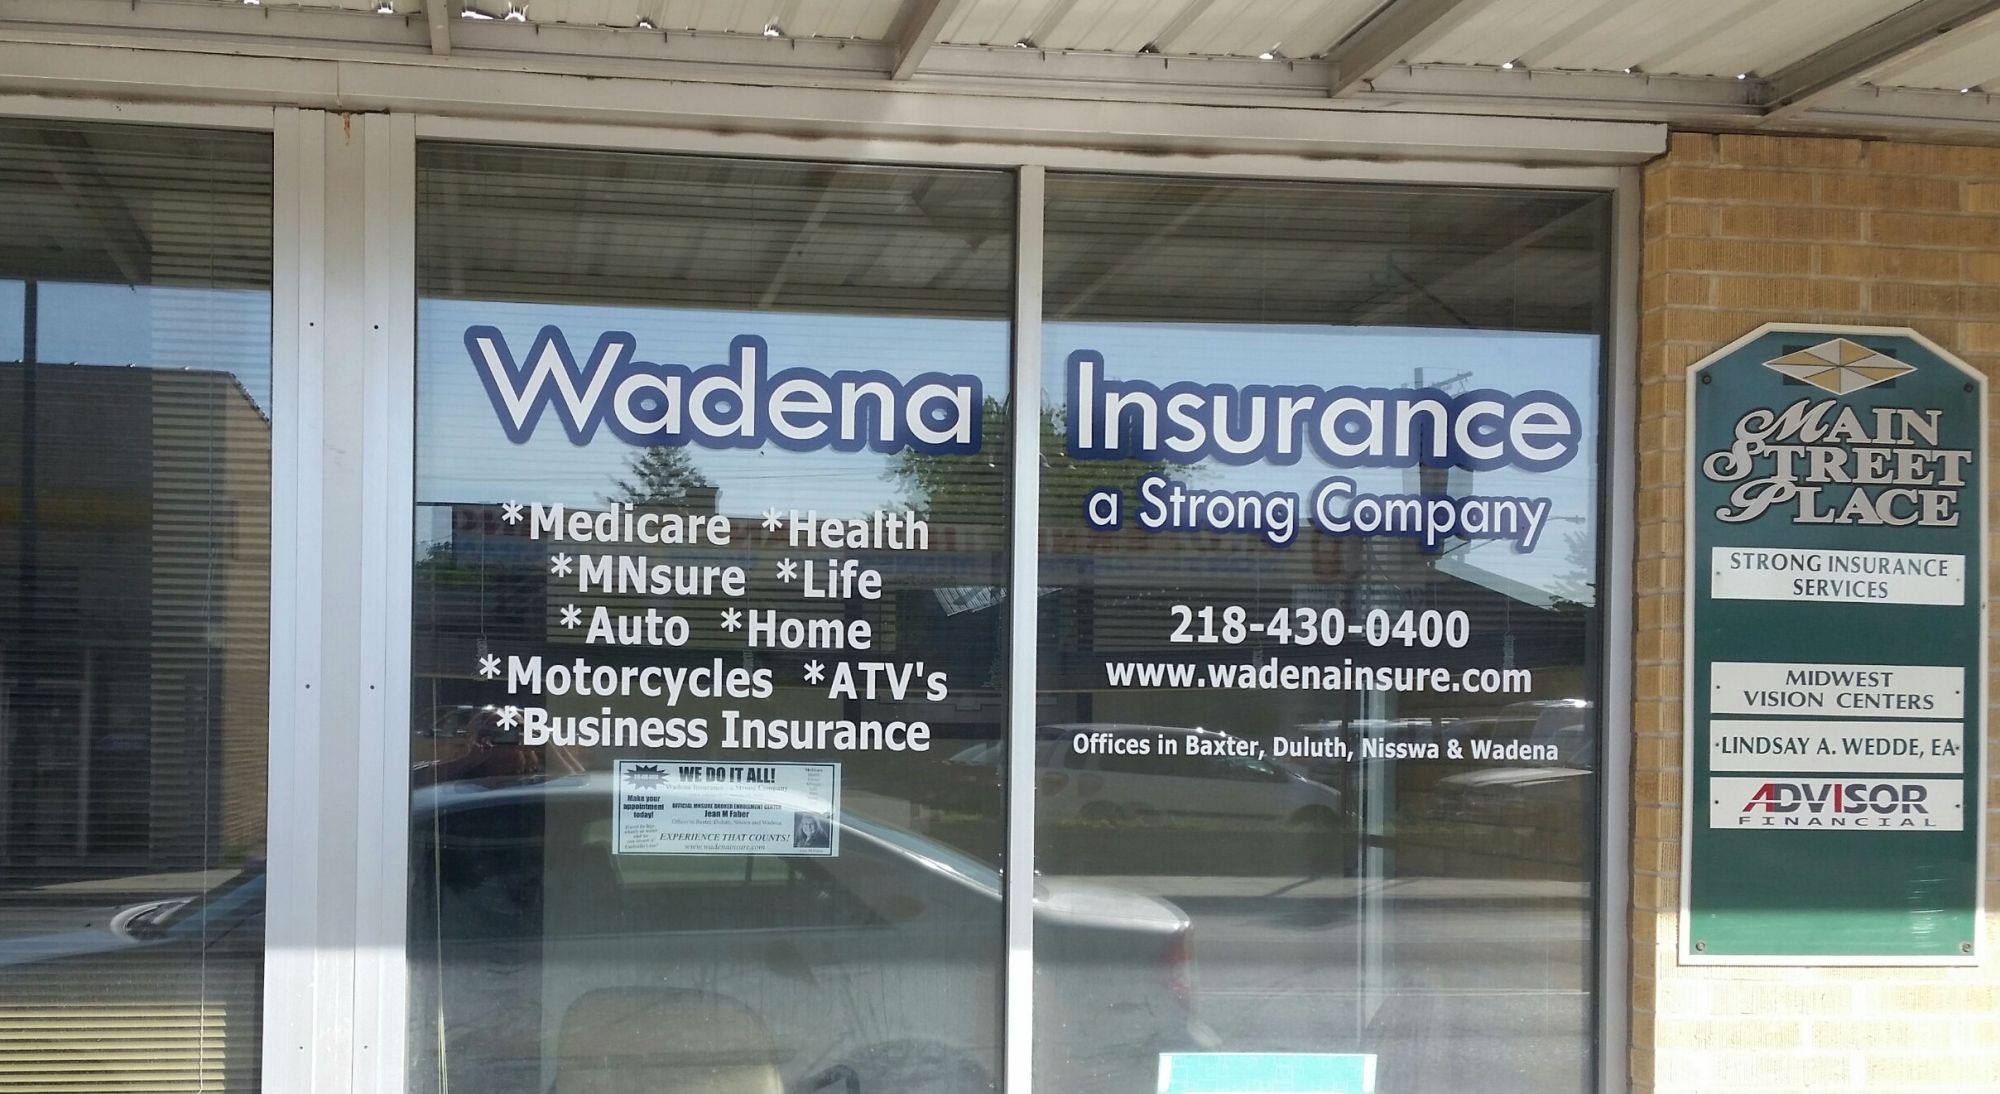 Strong Insurance of Wadena